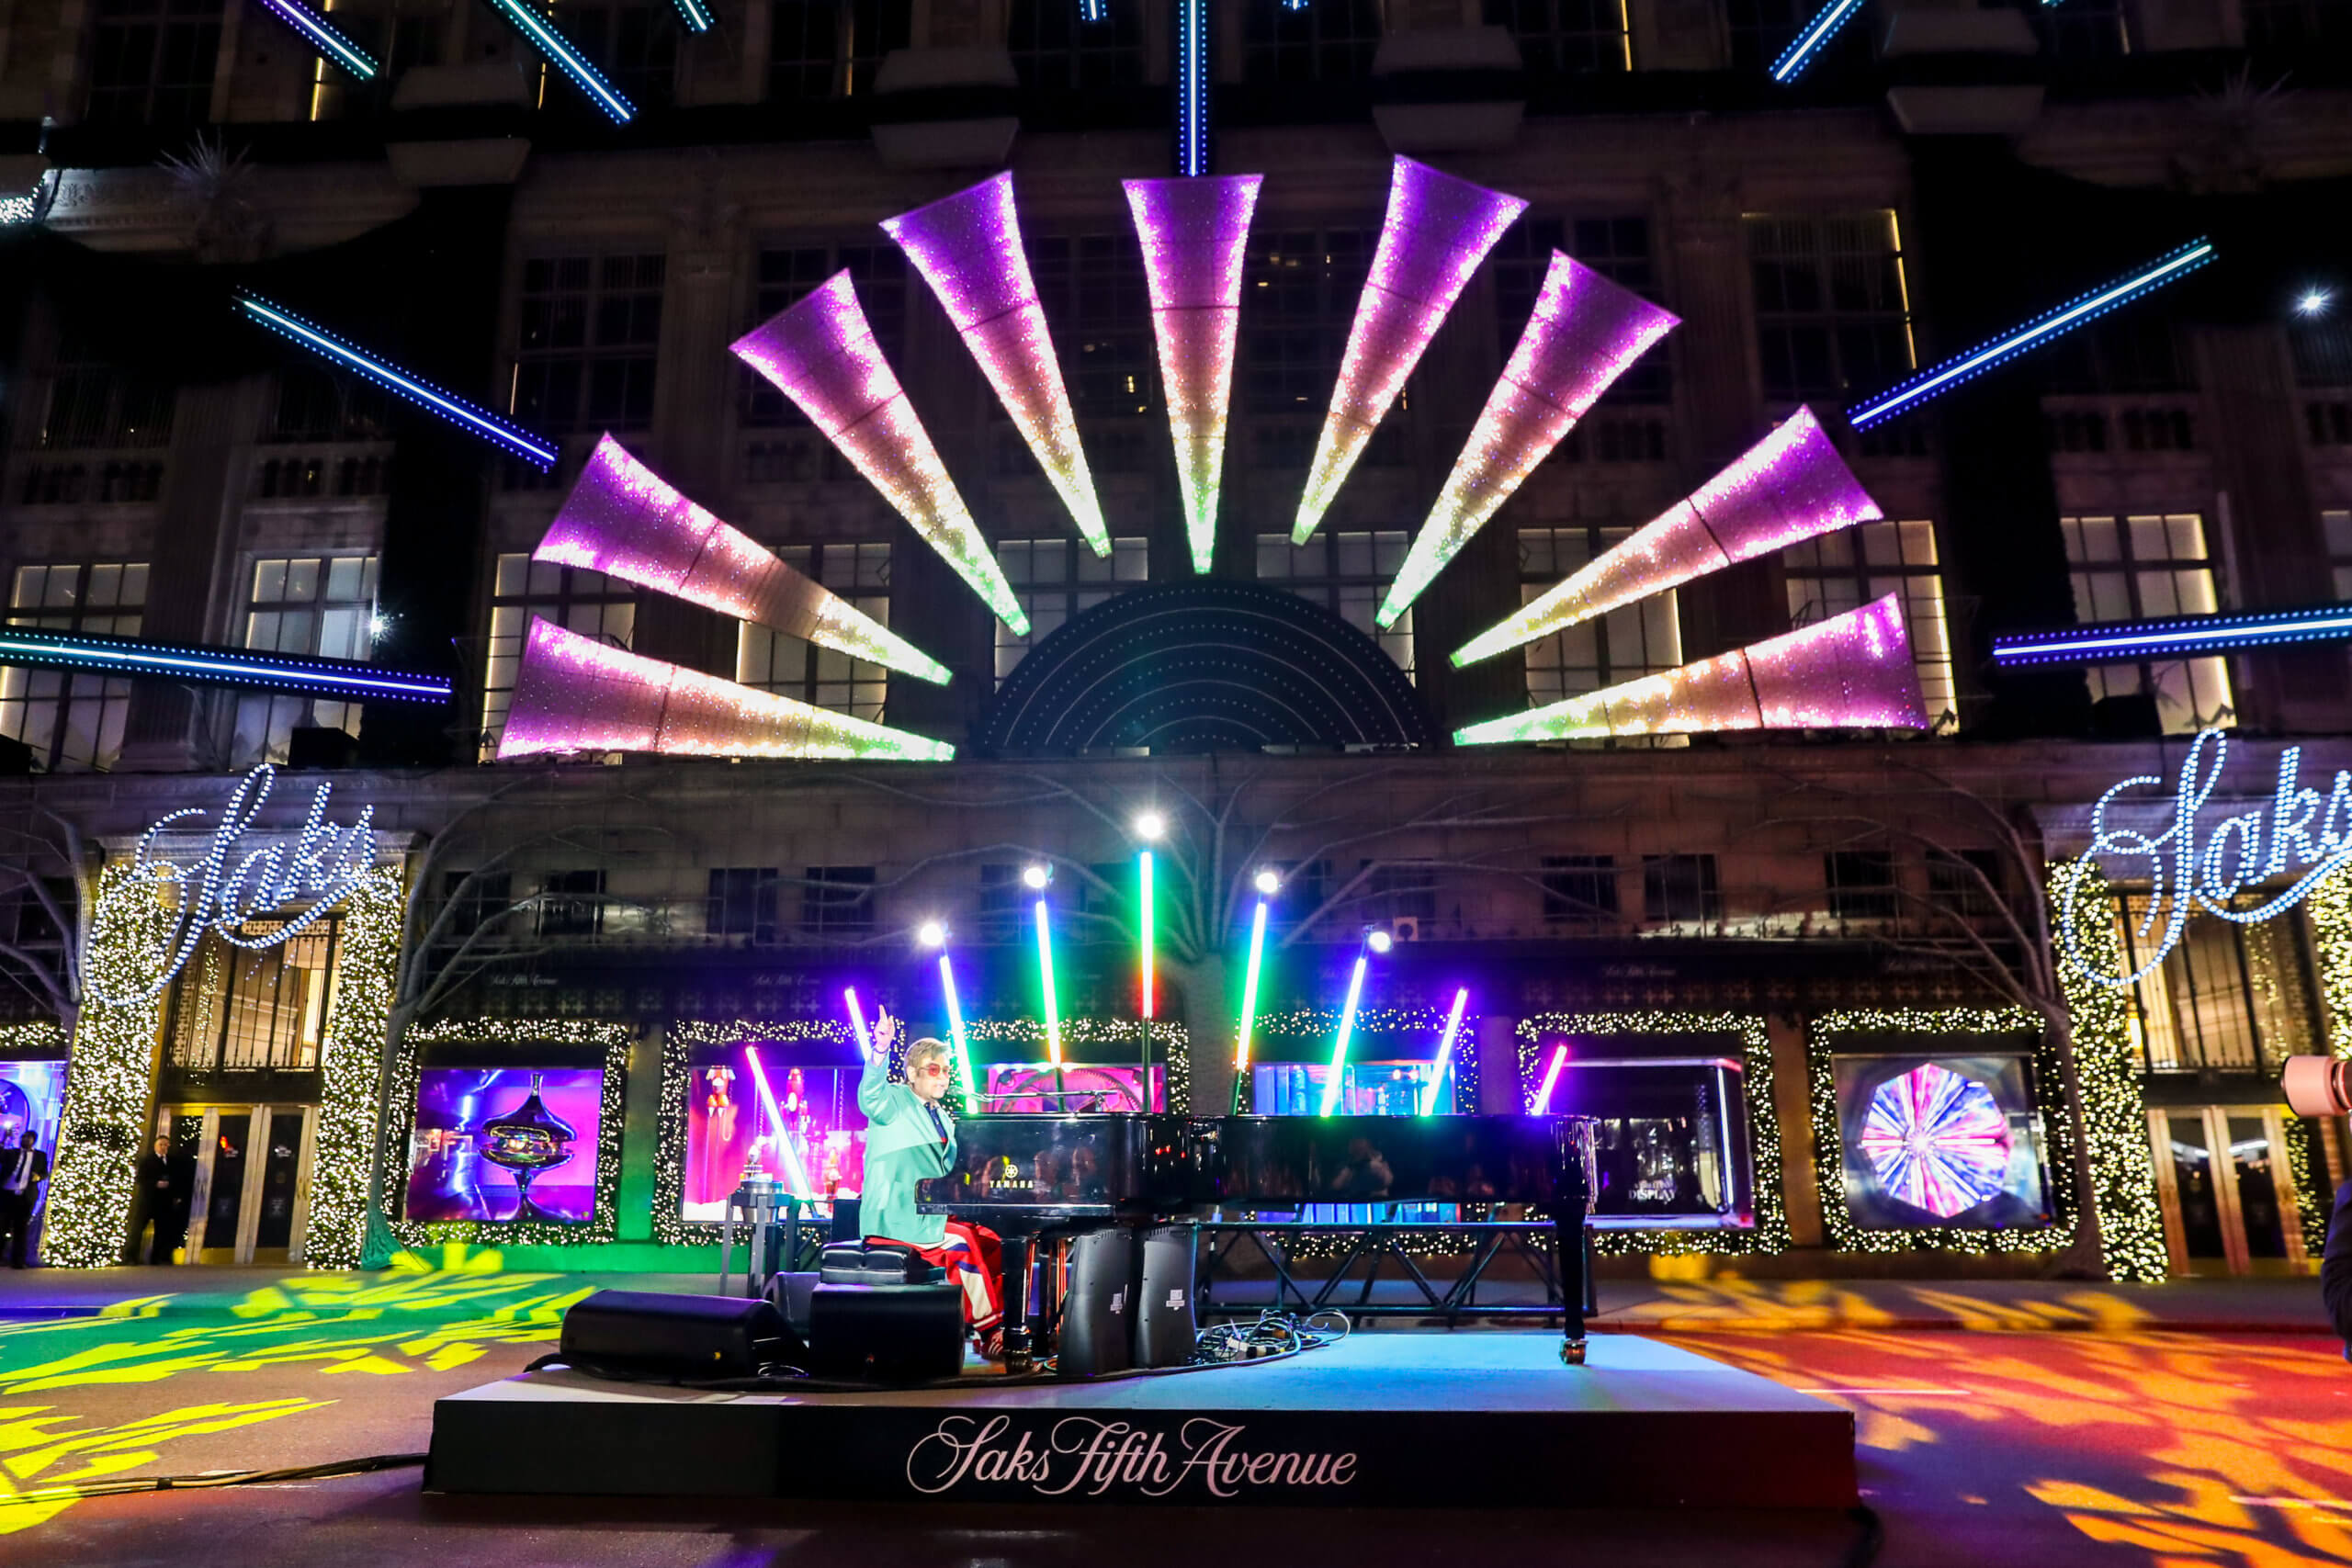 Sir Elton John kicks off holiday season at Saks Fifth Avenue window  unveiling and light show